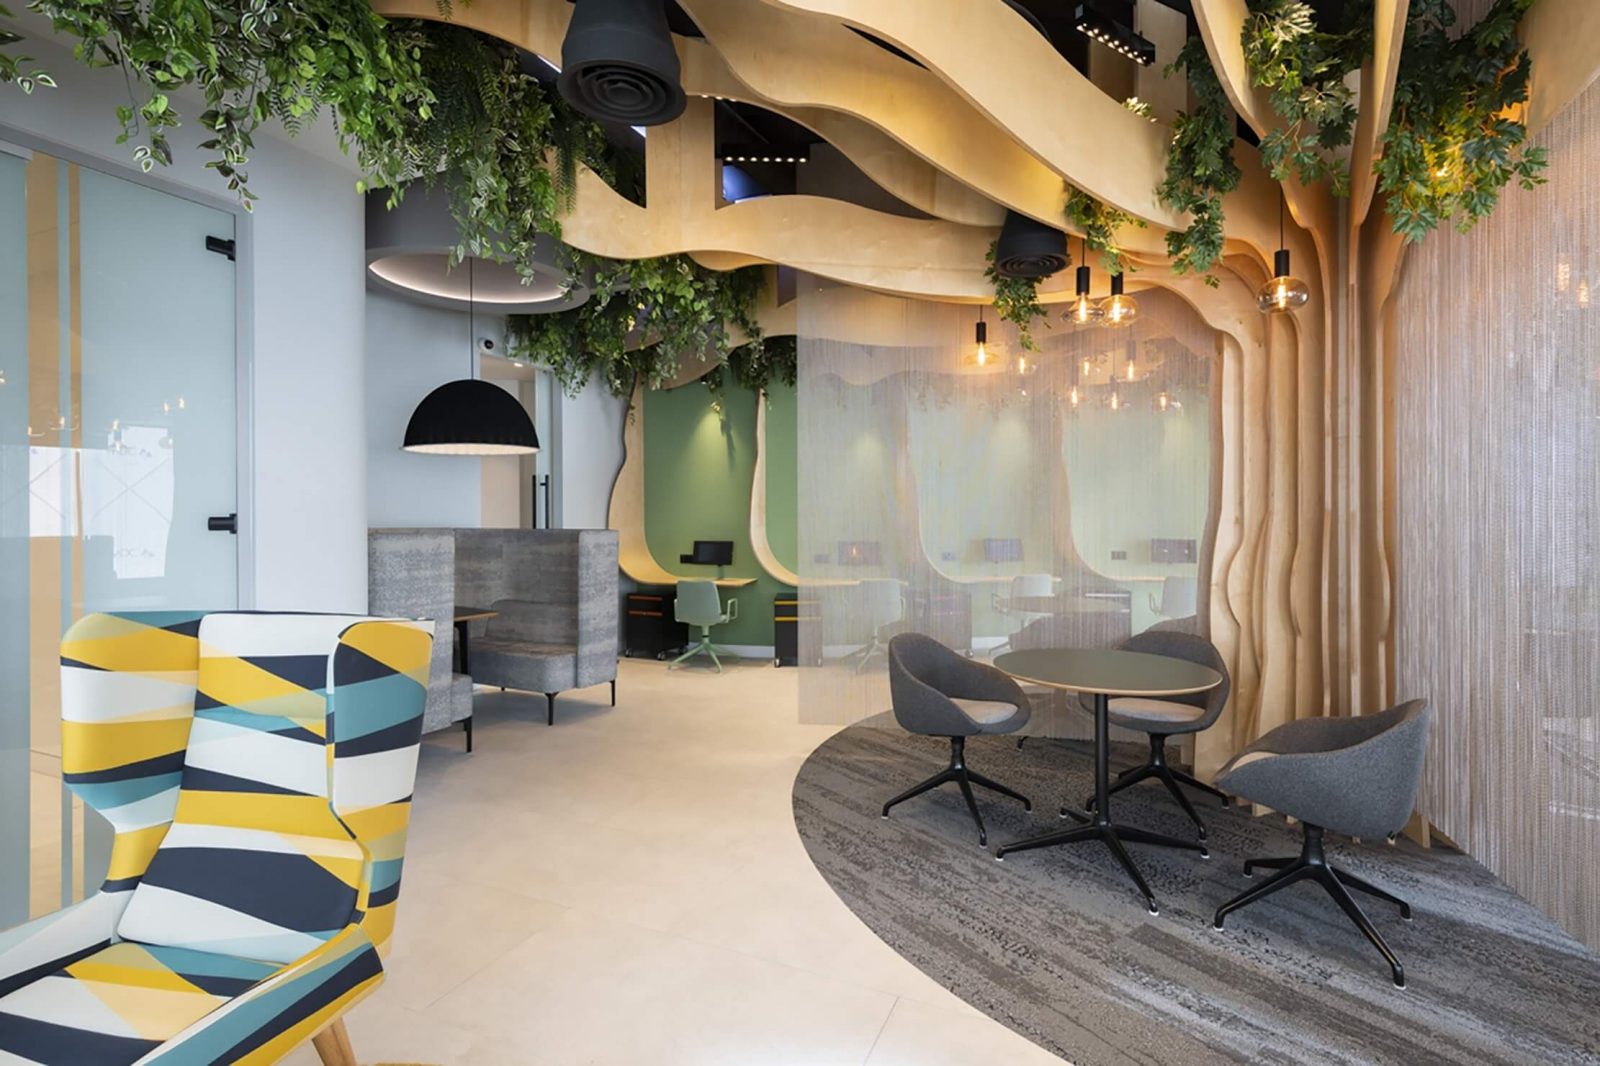 Biophilic design in office spaces 1